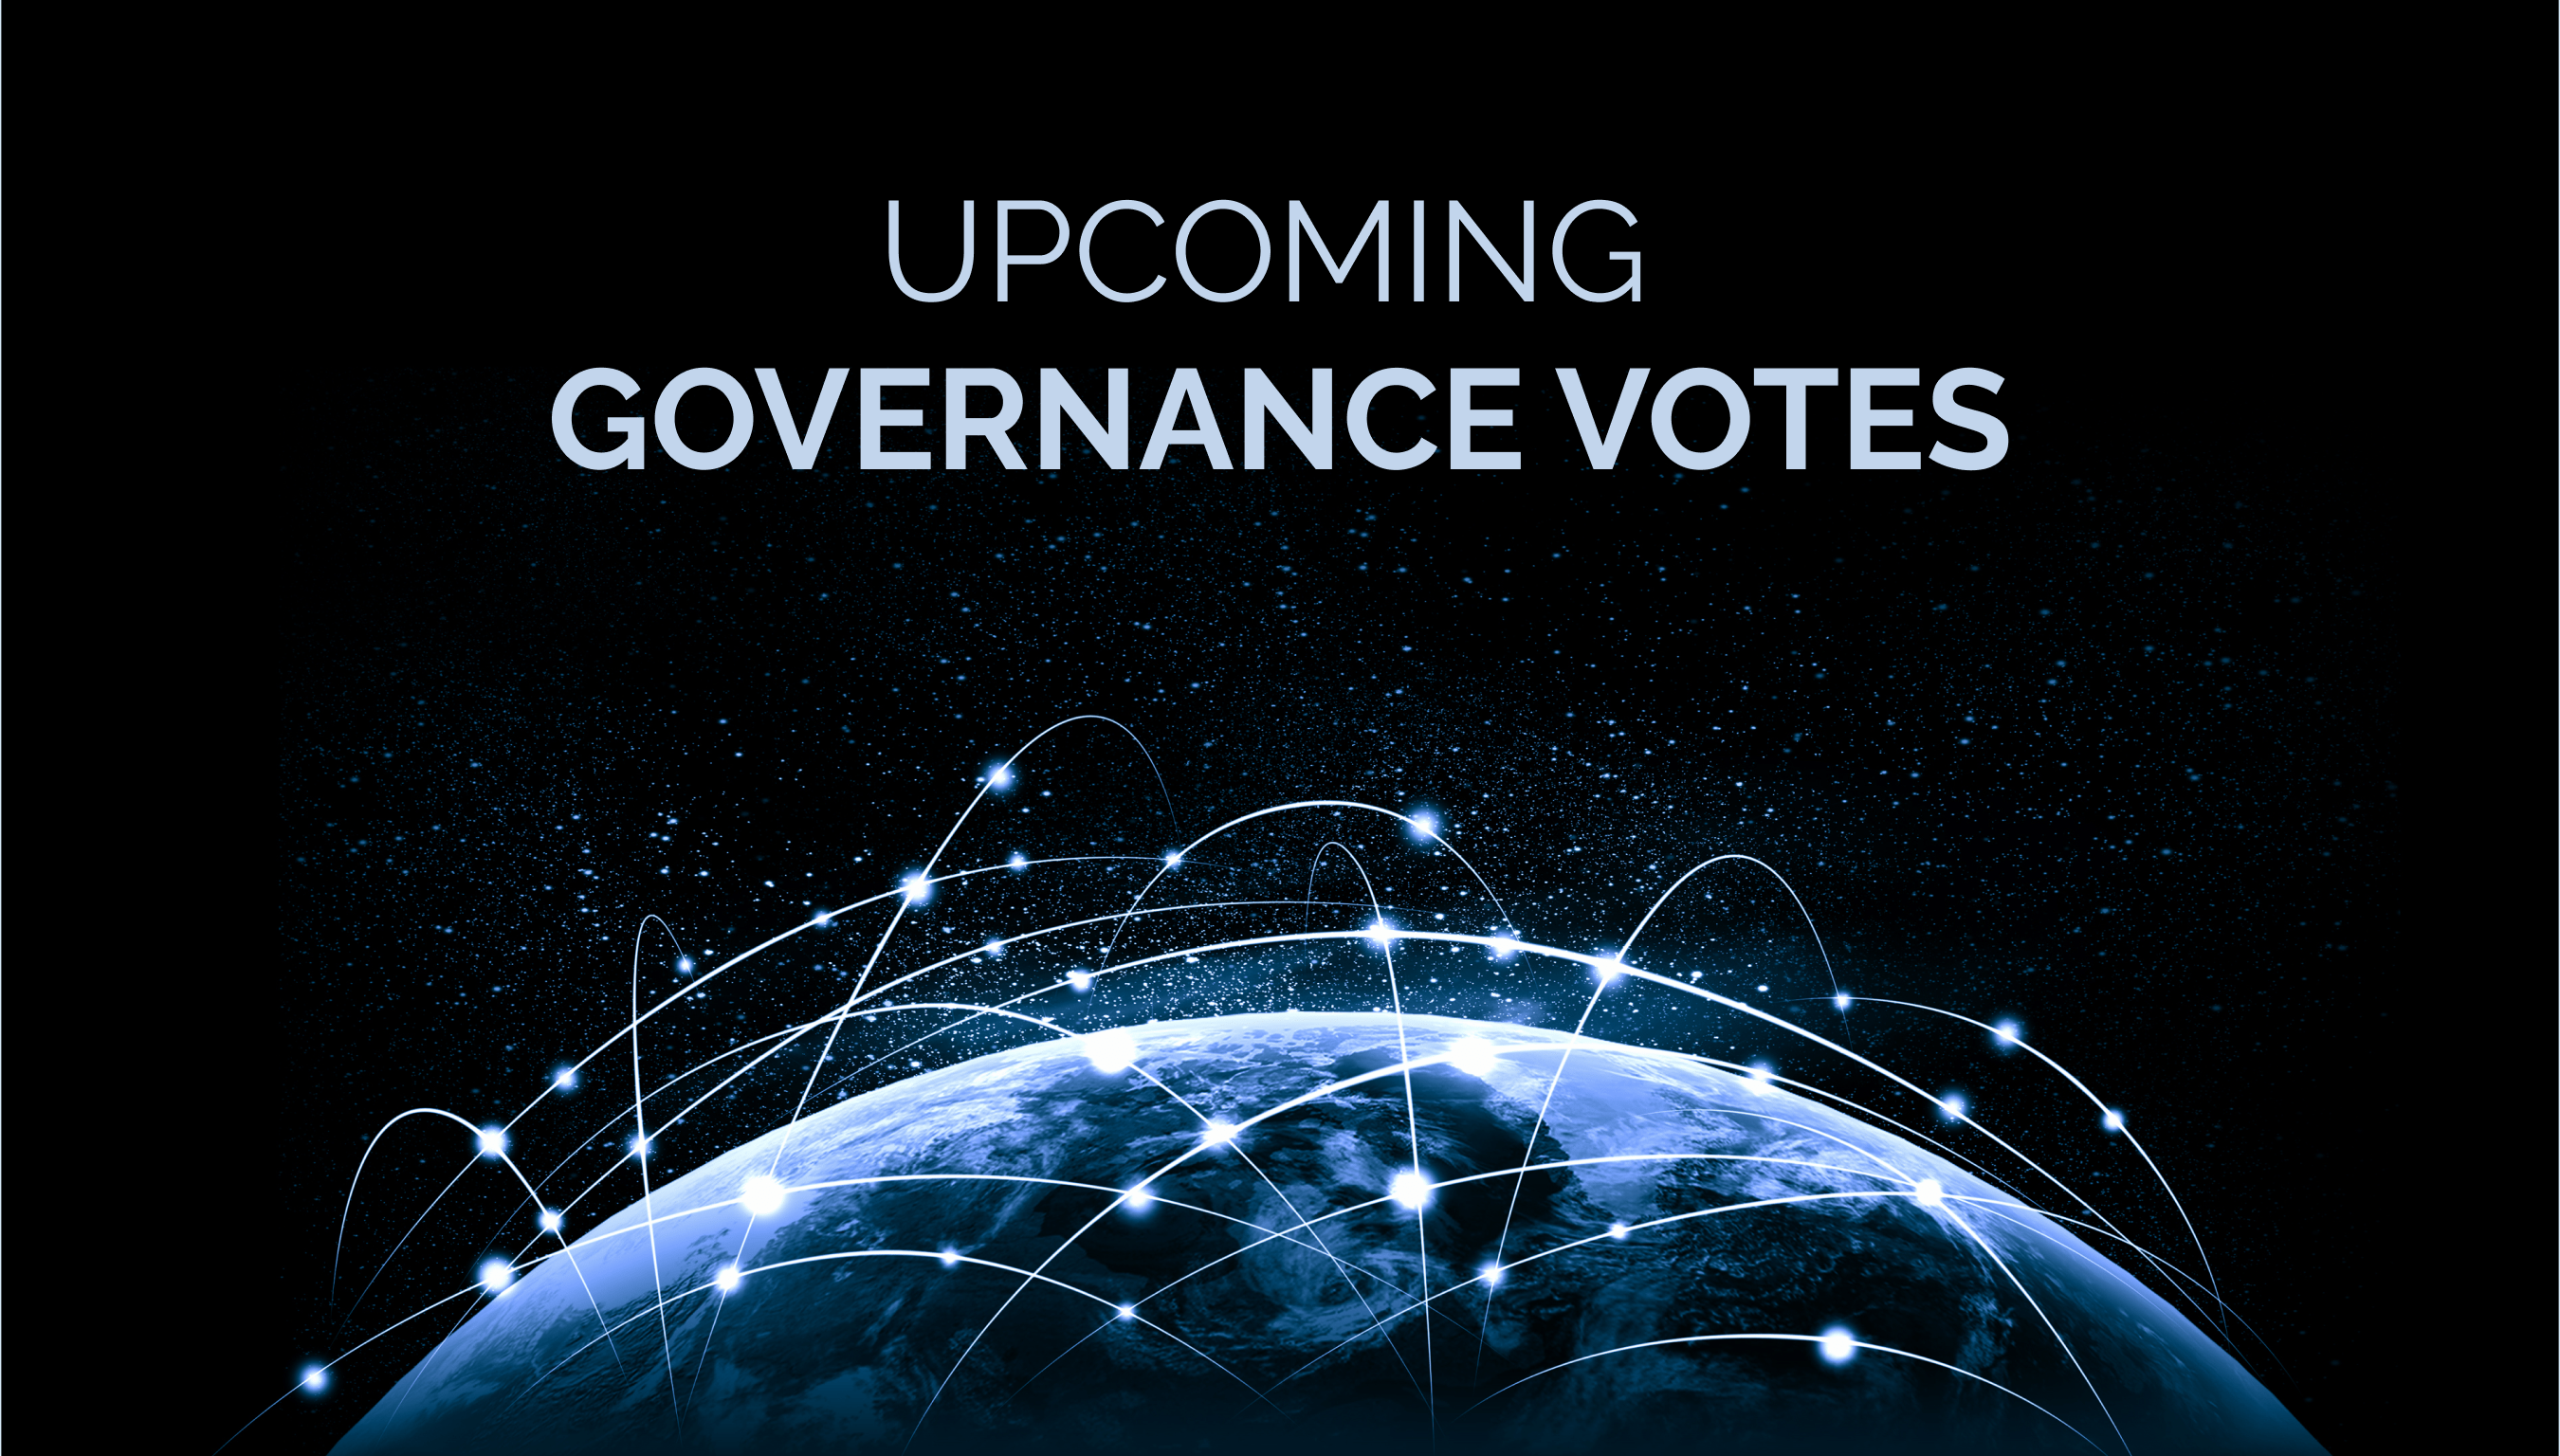 Governance votes